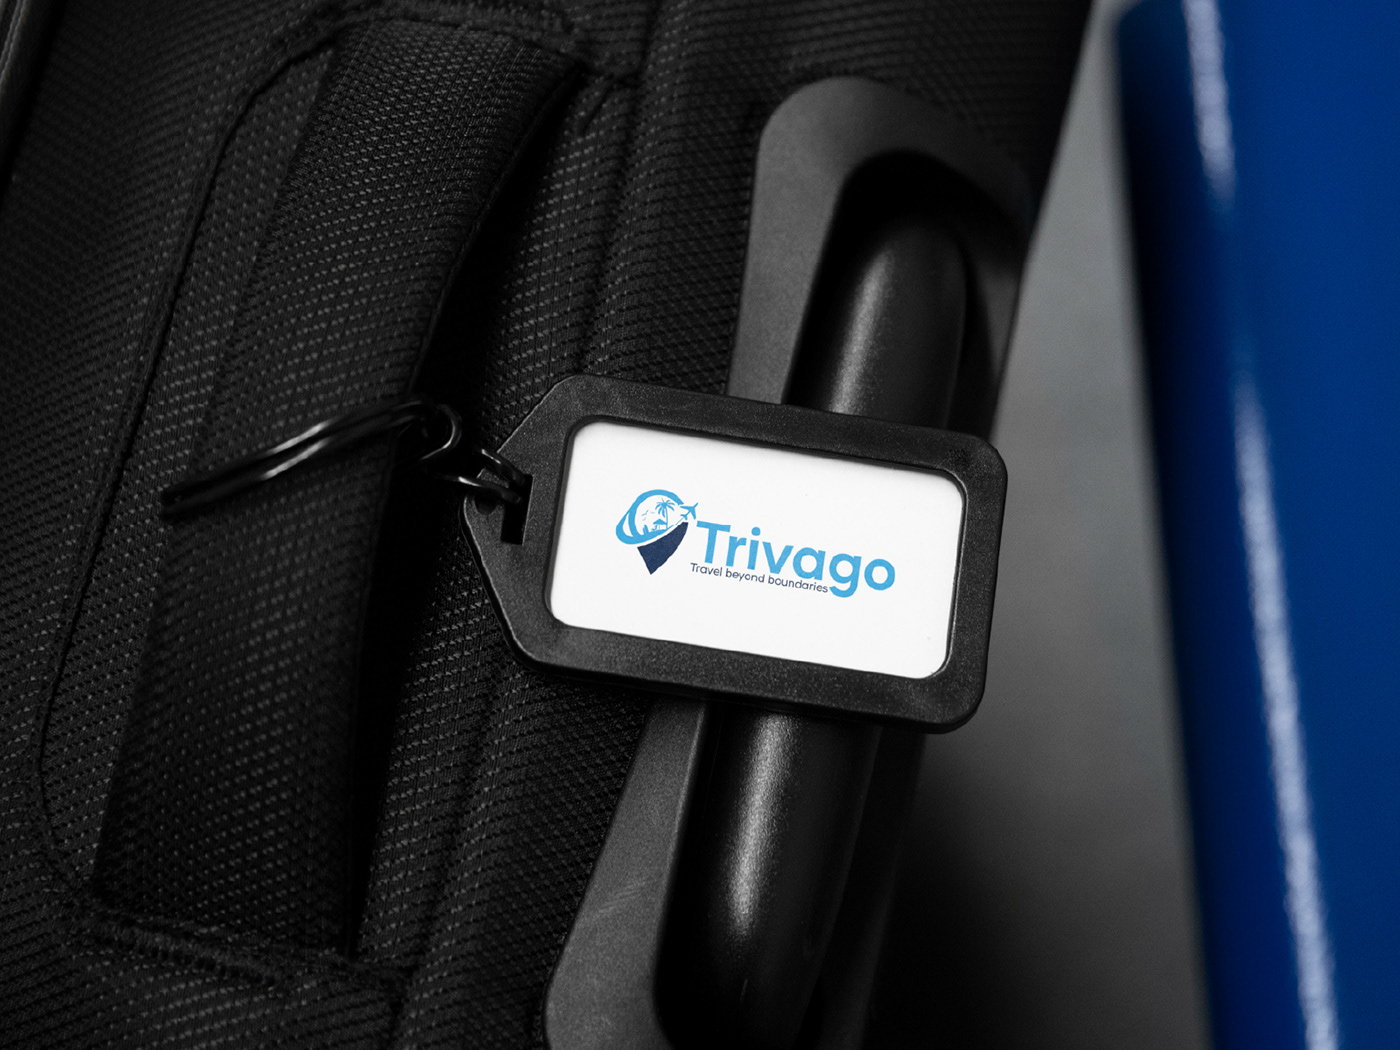 
Trivago Traveling Logo Design And Branding 